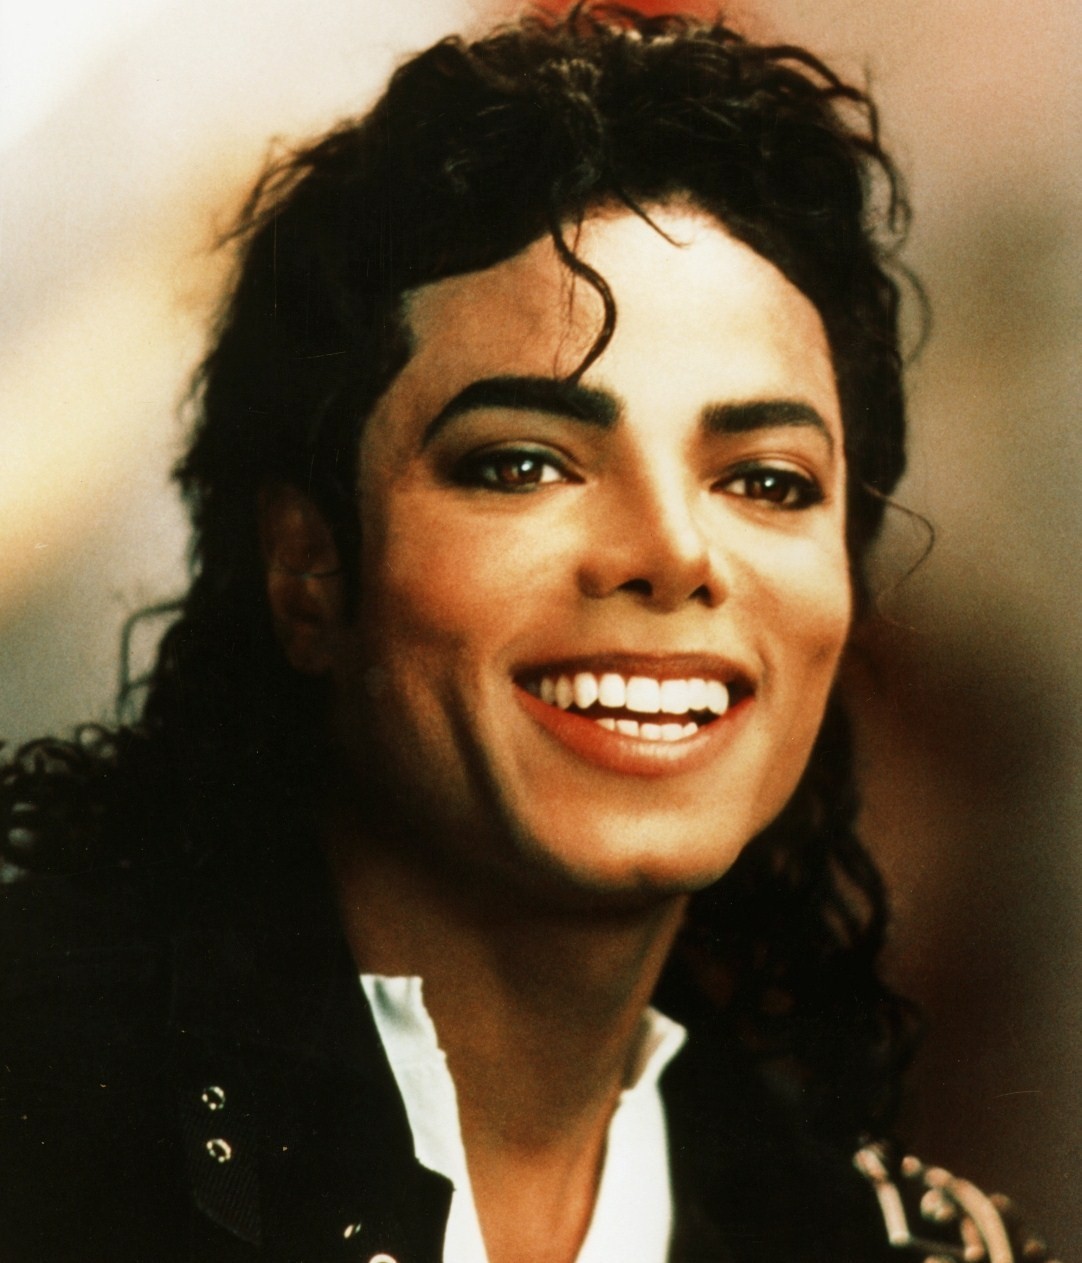 Michael Jackson #16